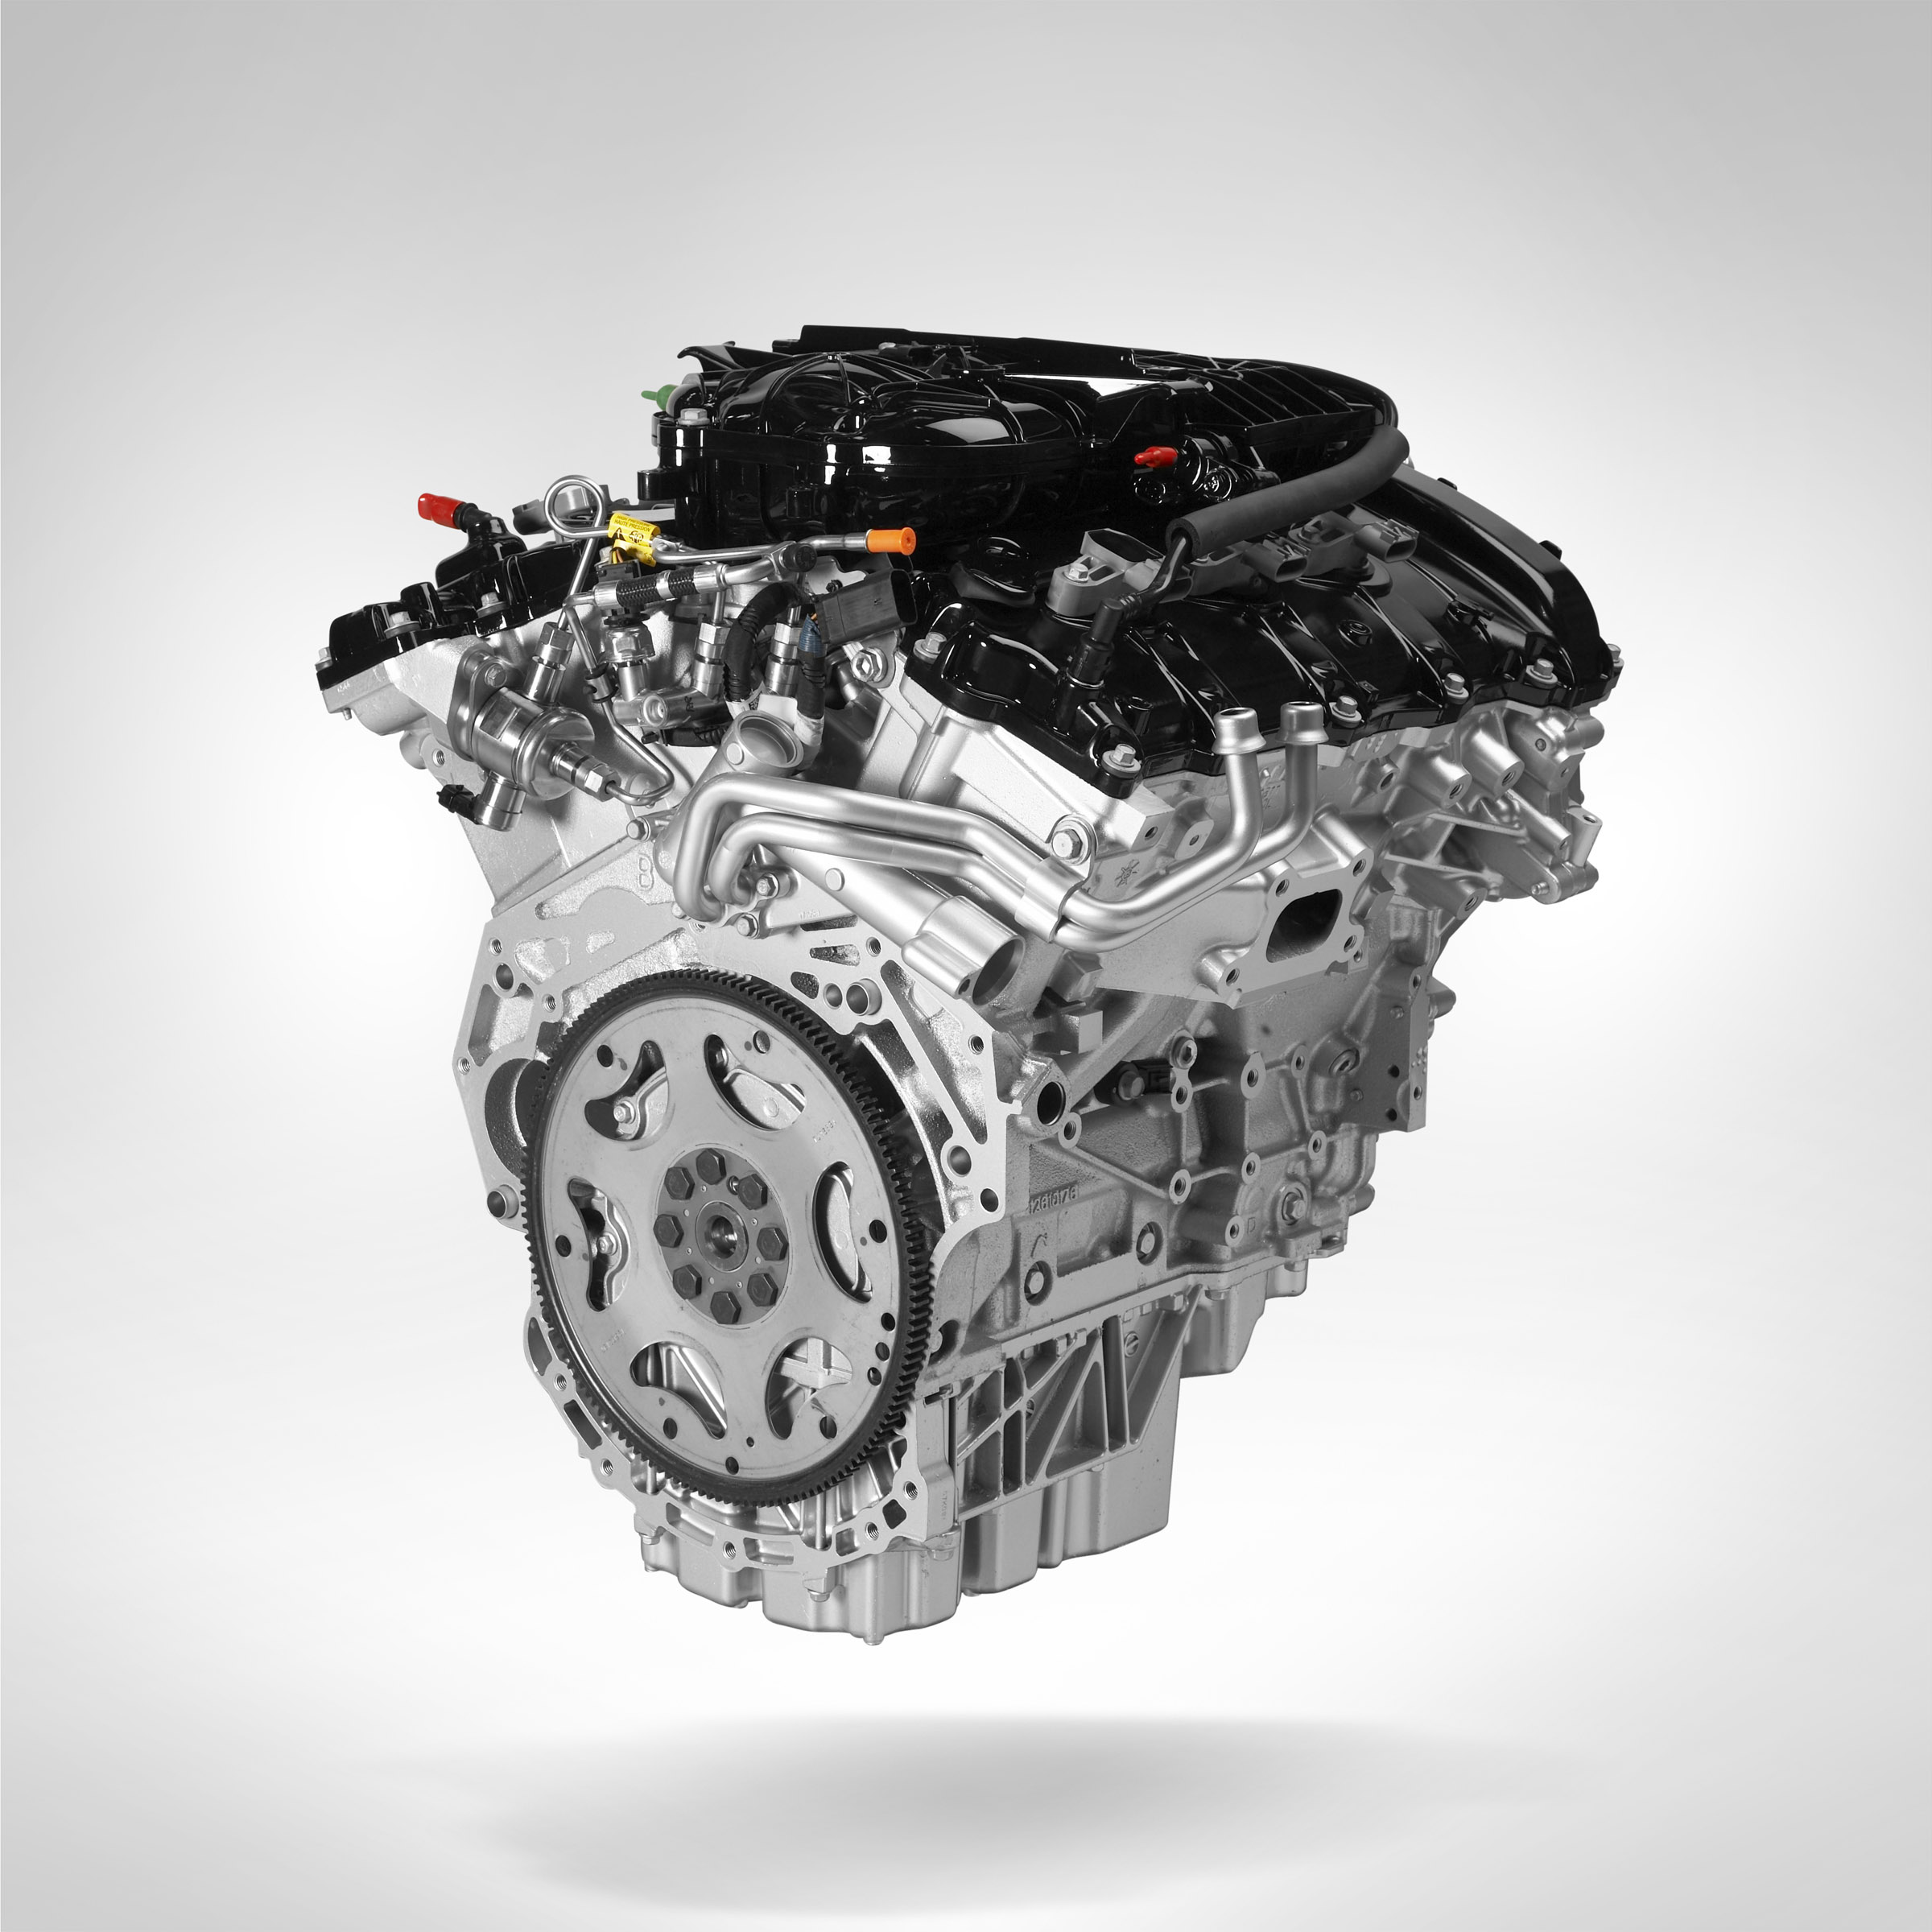 3.0L V6 SIDI Engine